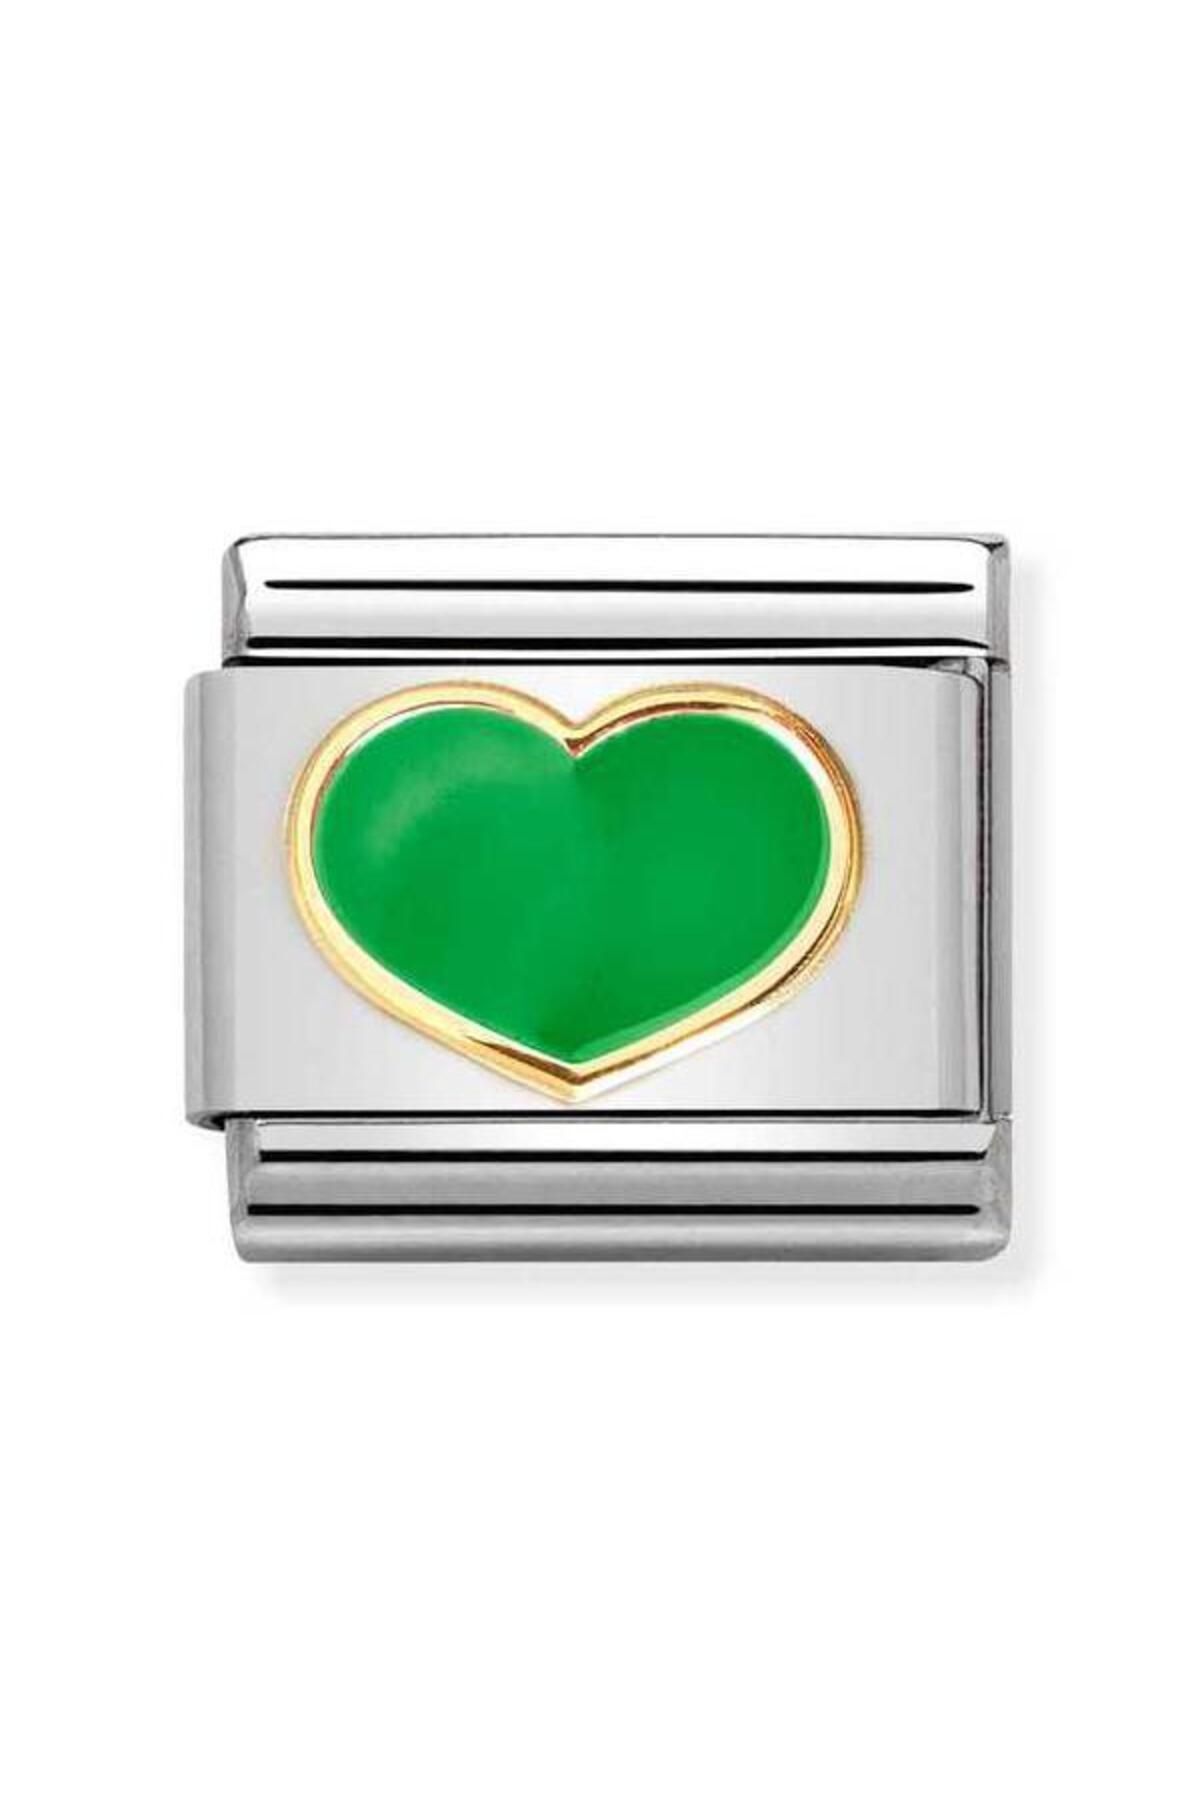 NOMİNATİON Composable Classic Dekoratif Link - Aşk - Yeşil Kalp - (23 GREEN APPLE HEART) 18k Altın